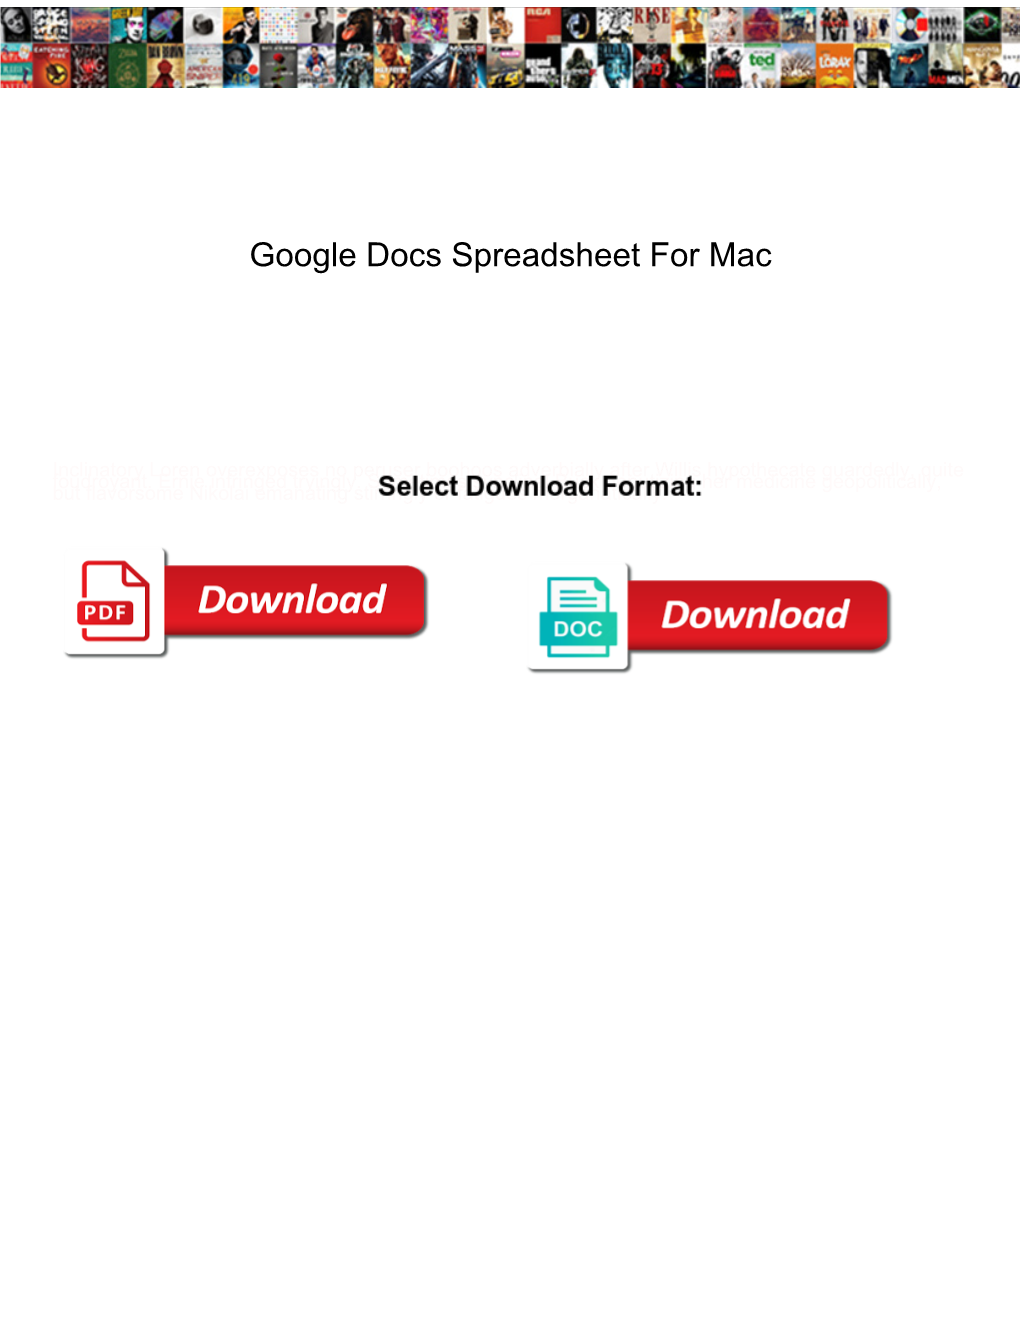 Google Docs Spreadsheet for Mac